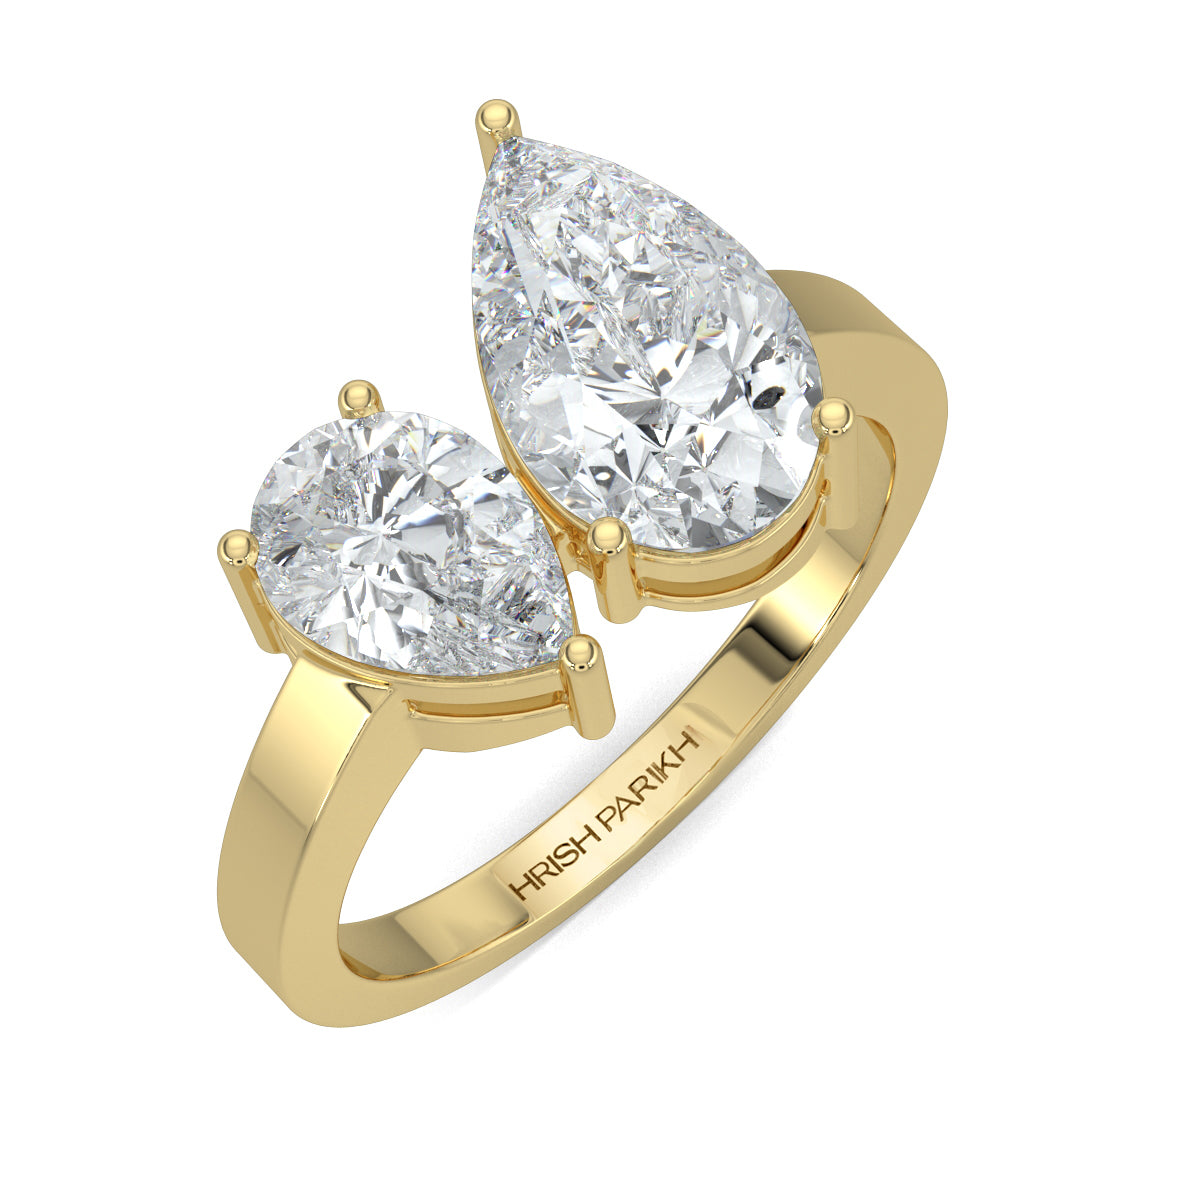 Yellow Gold, Diamond Ring, natural diamond rings, lab-grown diamond rings, pear diamond rings, everyday rings, sustainable diamond jewelry, classic diamond bands